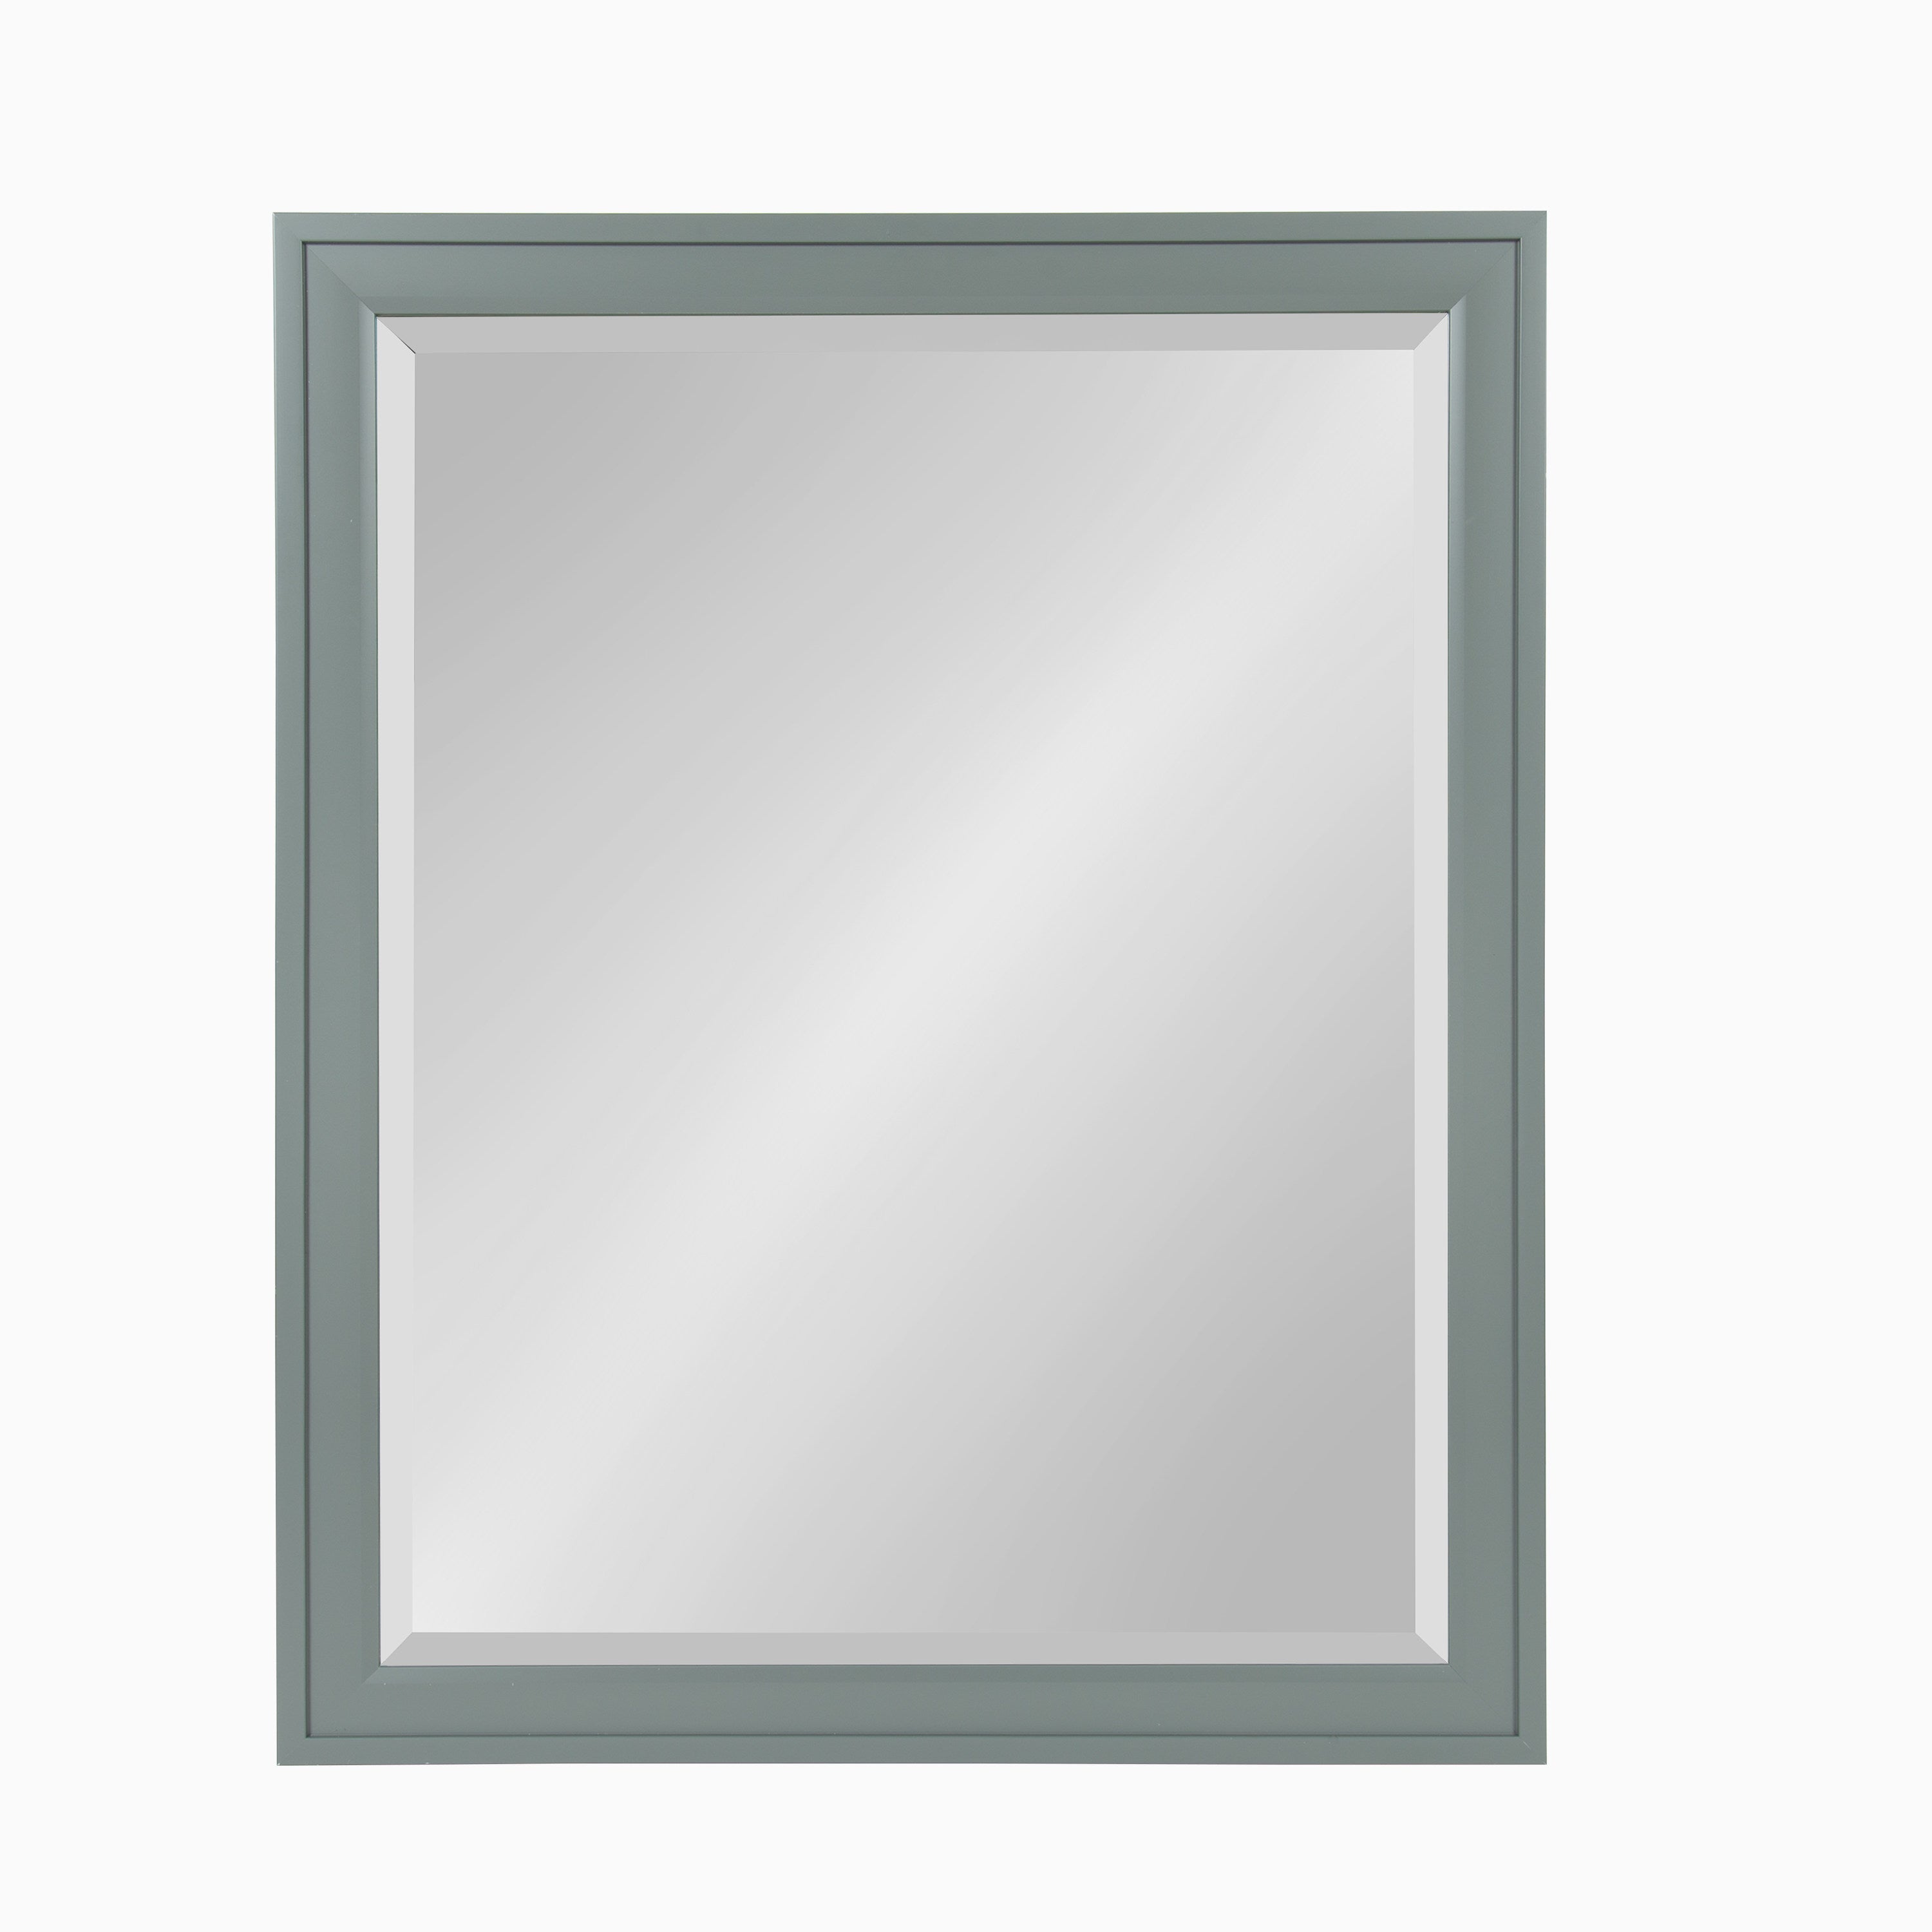 Bosc Framed Wall Mirror